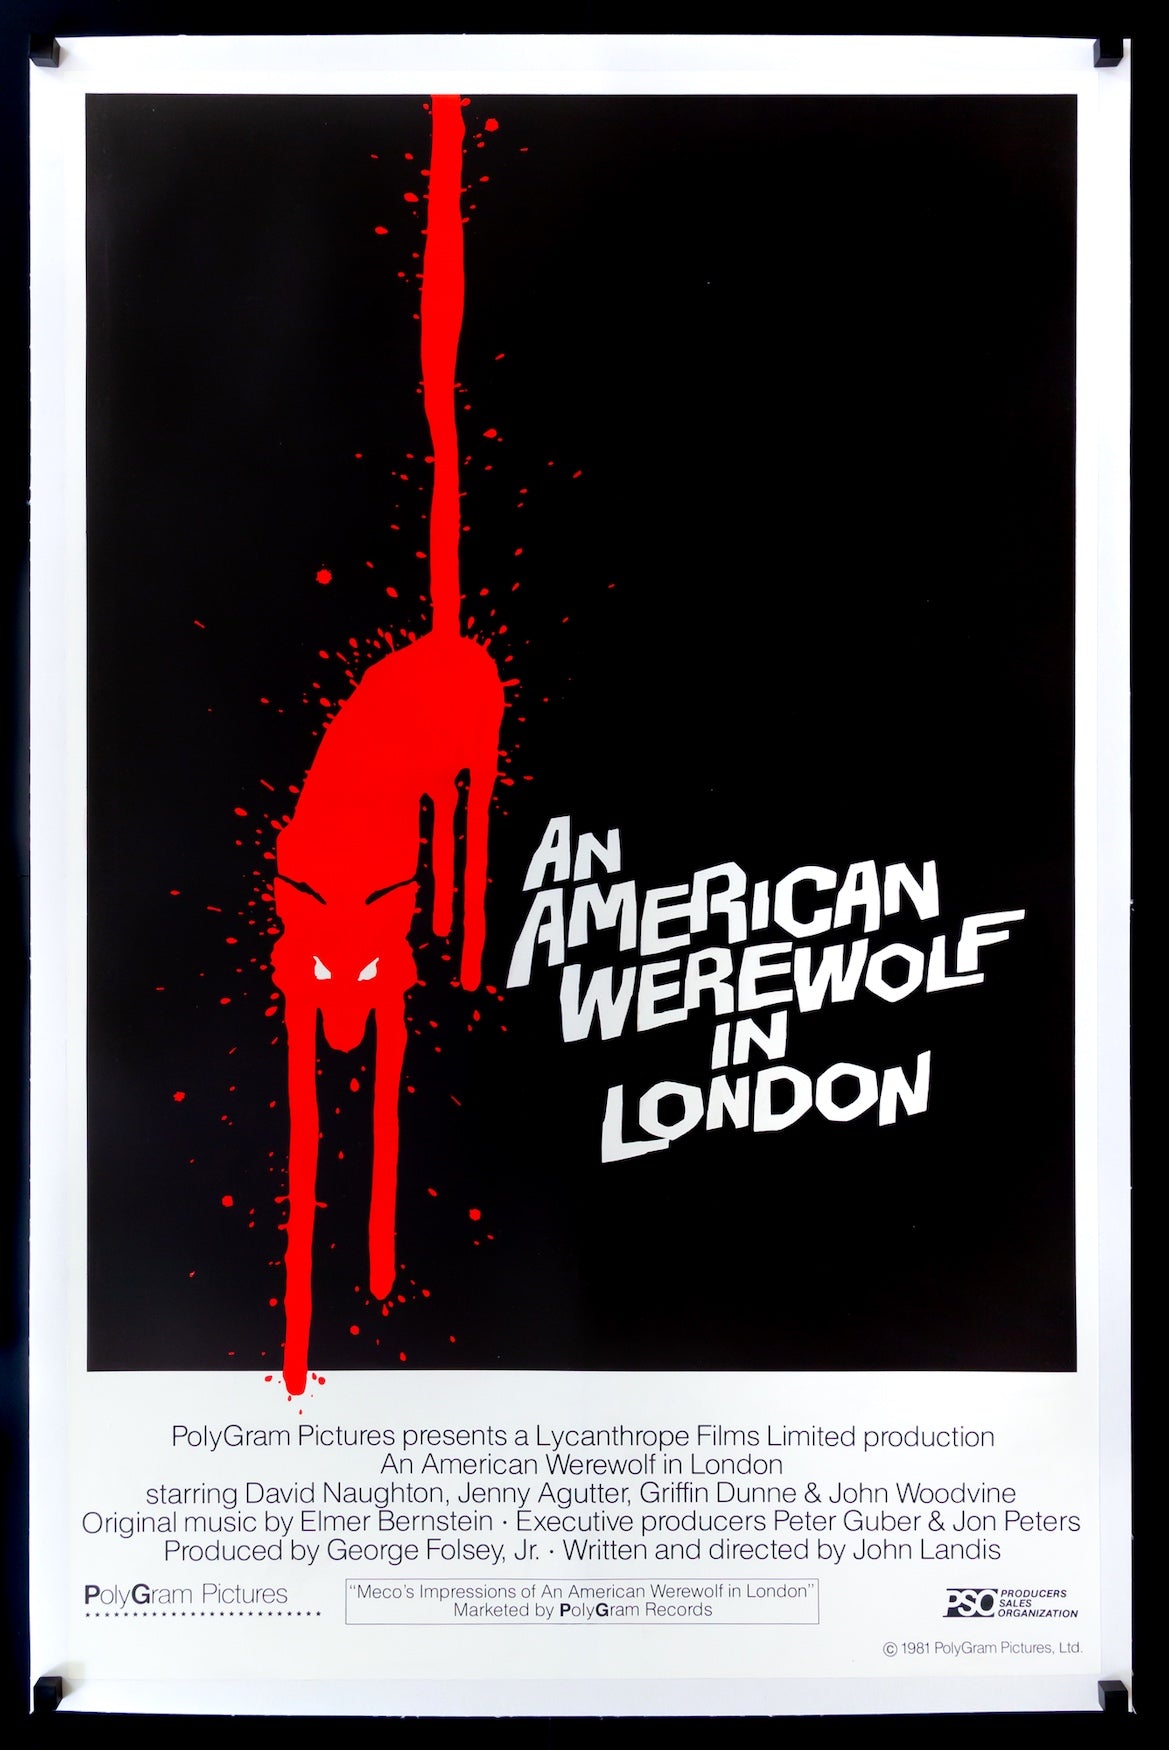 An American Werewolf in London (1981) original movie poster for sale at Original Film Art